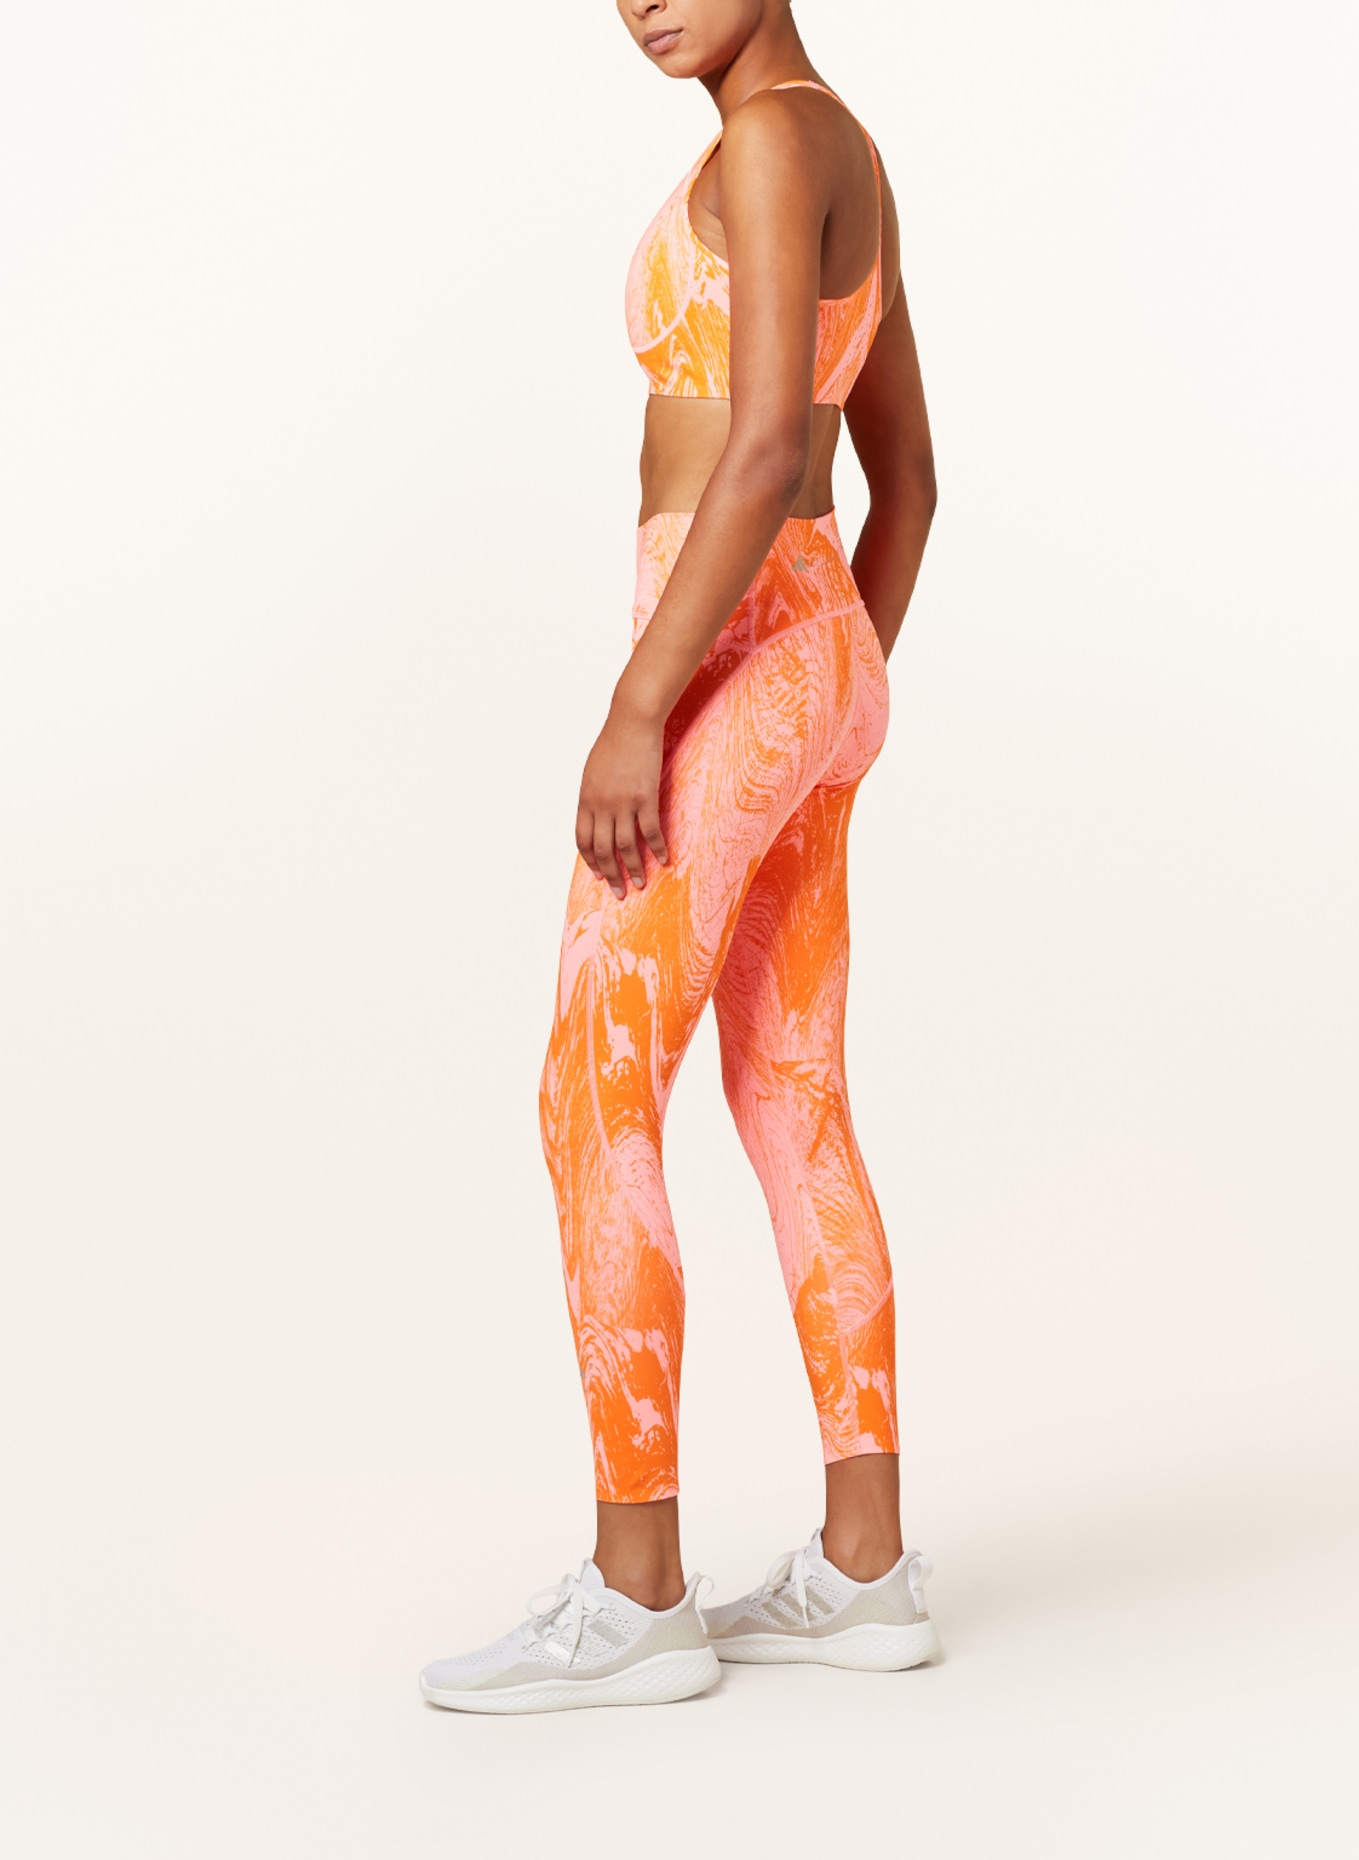 adidas by Stella McCartney 7/8 tights TRUEPURPOSE in orange/ pink